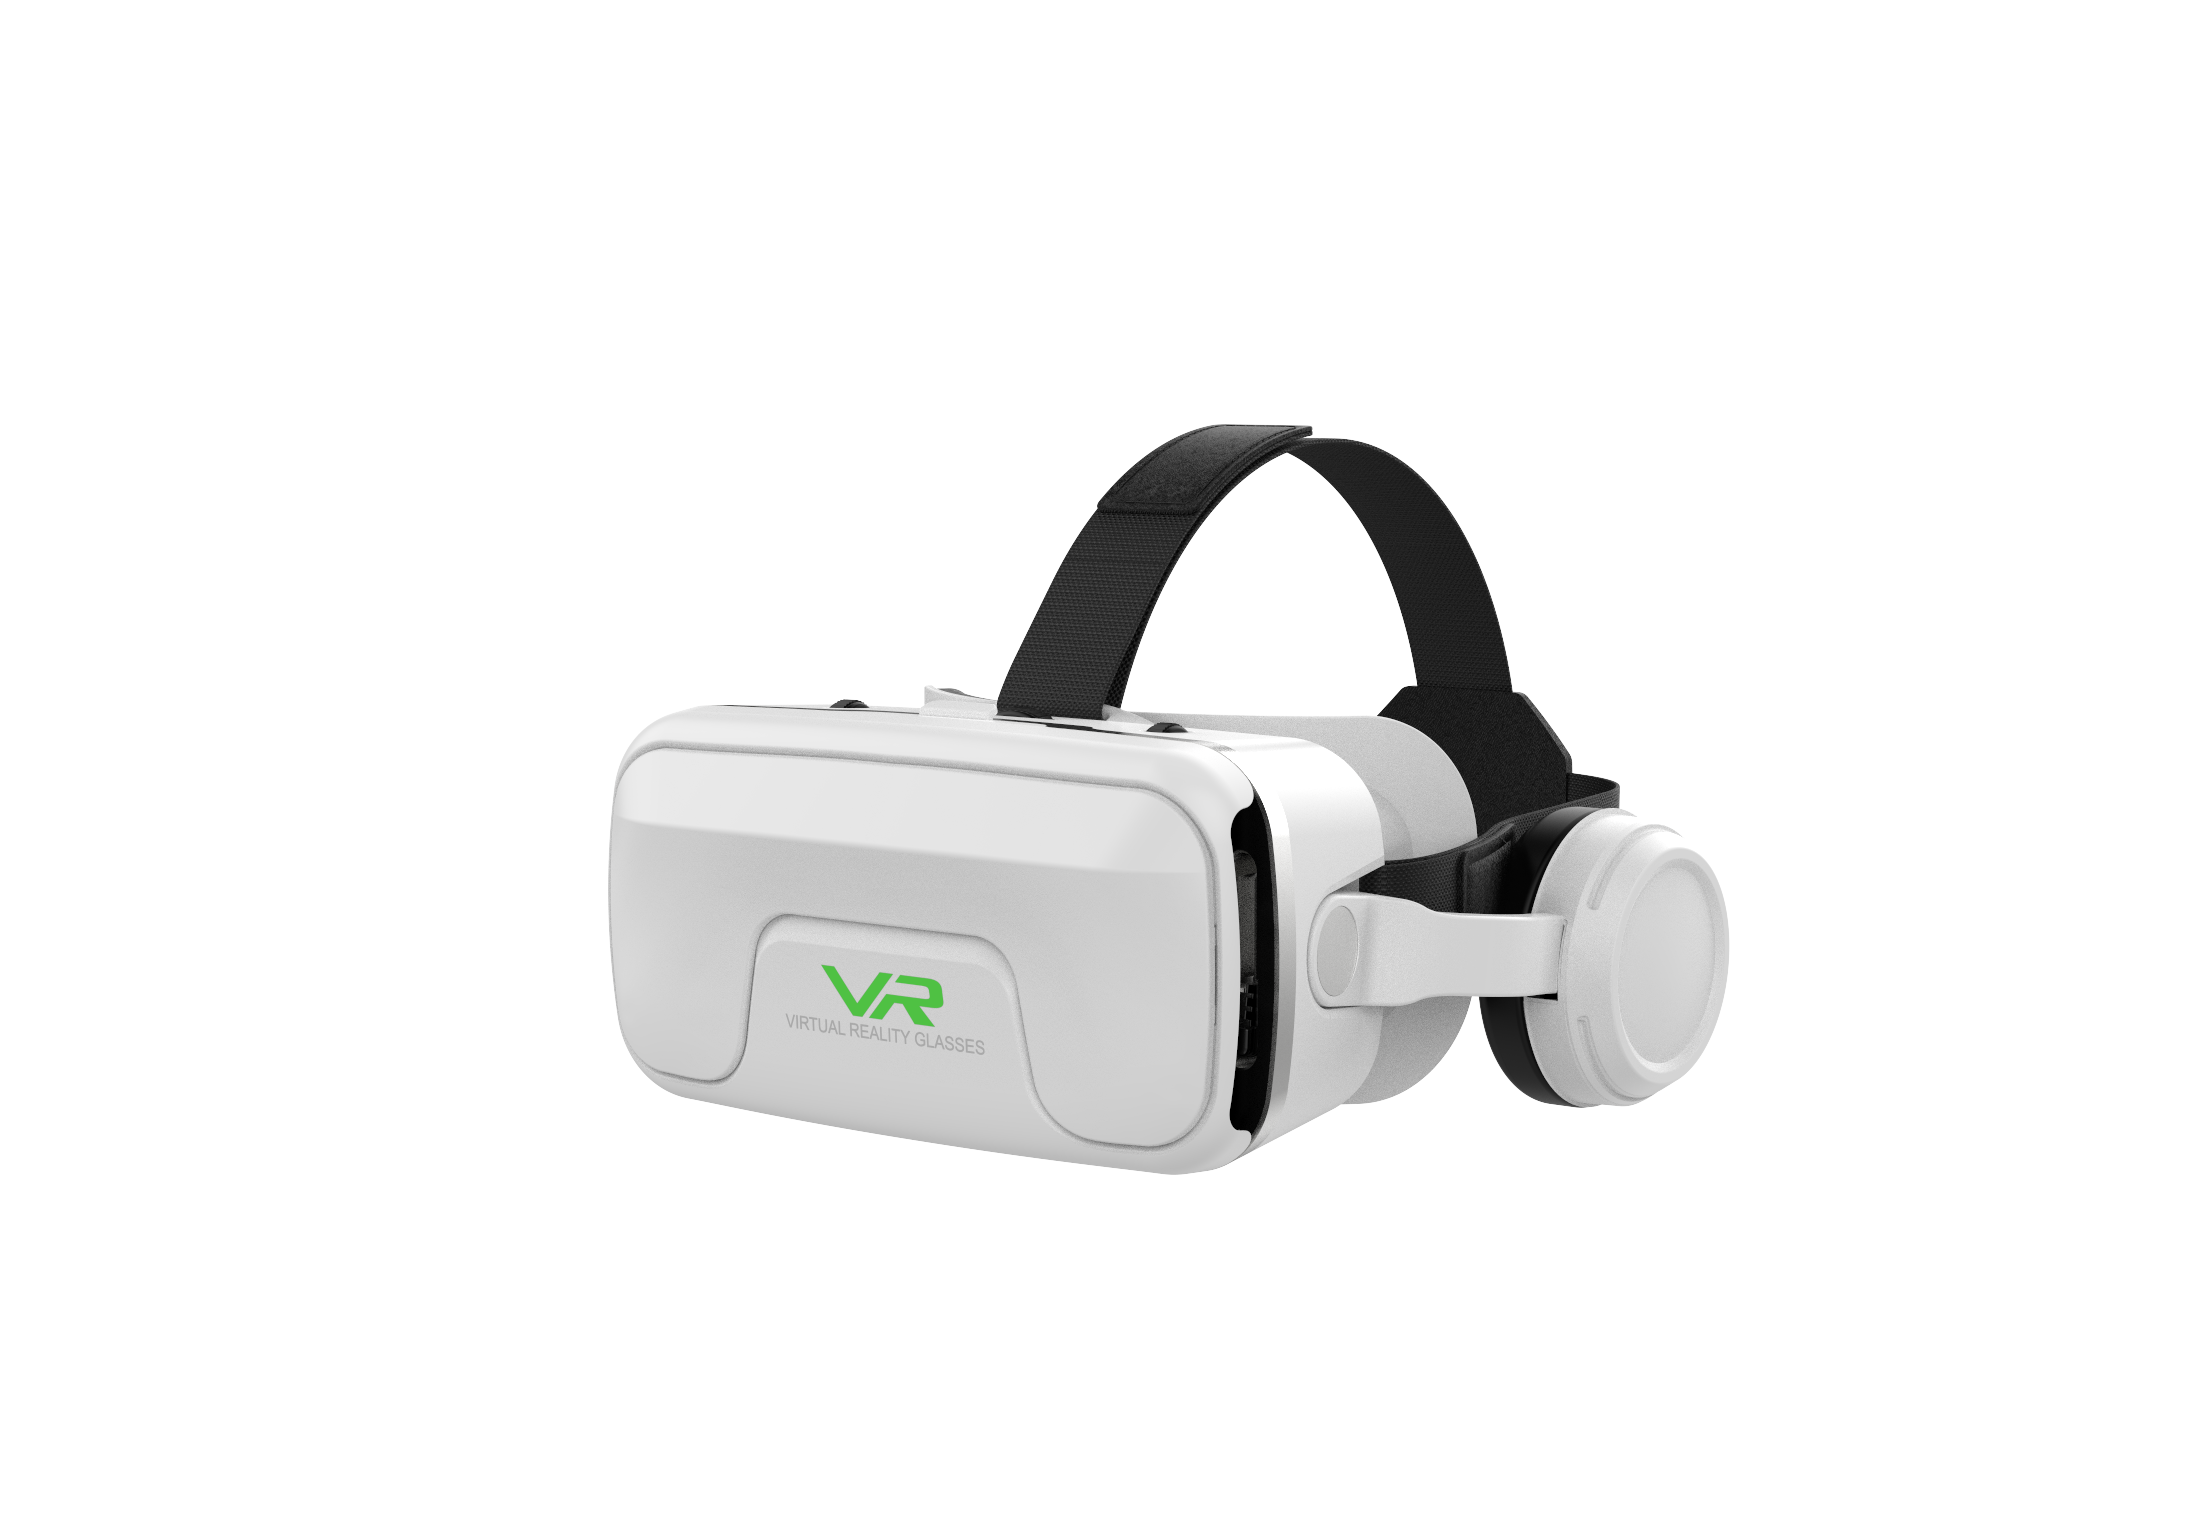 Wit Originele Vr Virtual Reality 3D Glazen Doos Stereo Vr Kartonnen Headset Helm Voor Ios Android Smartphone,Bluetooth Rocker